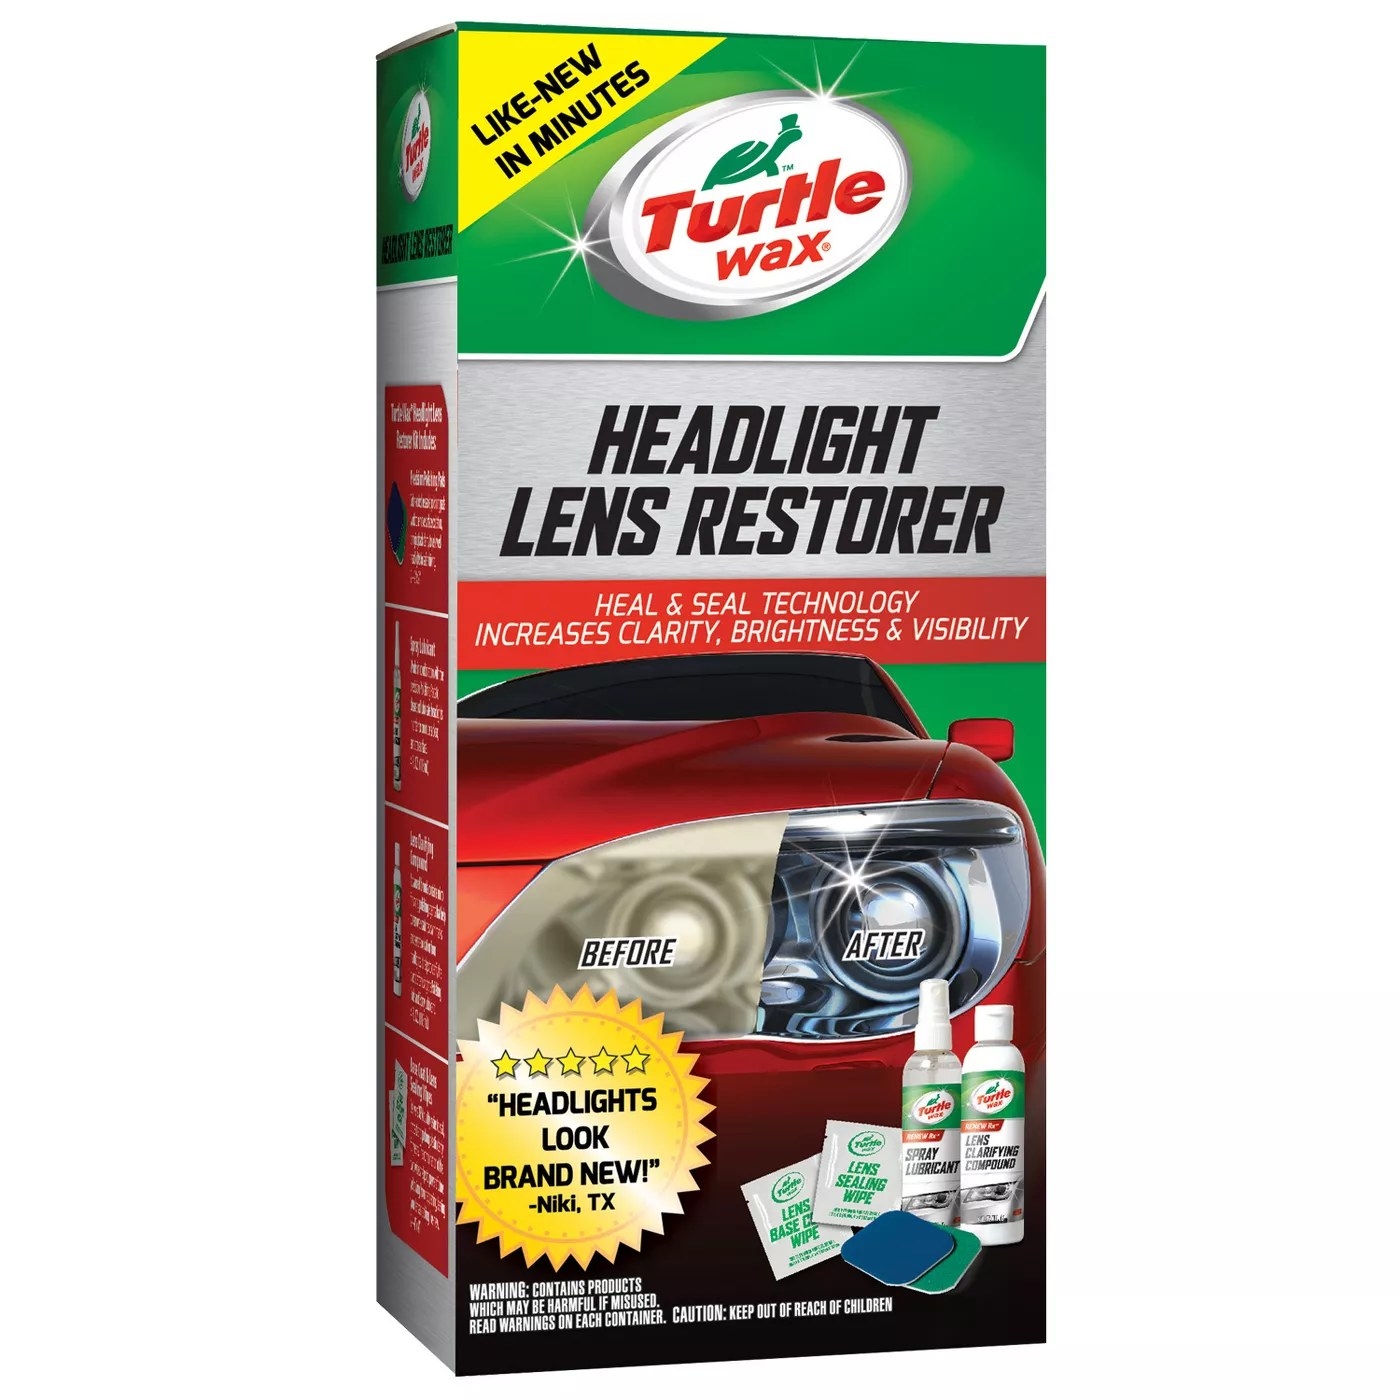 The Turtle Wax headlight lens restorer